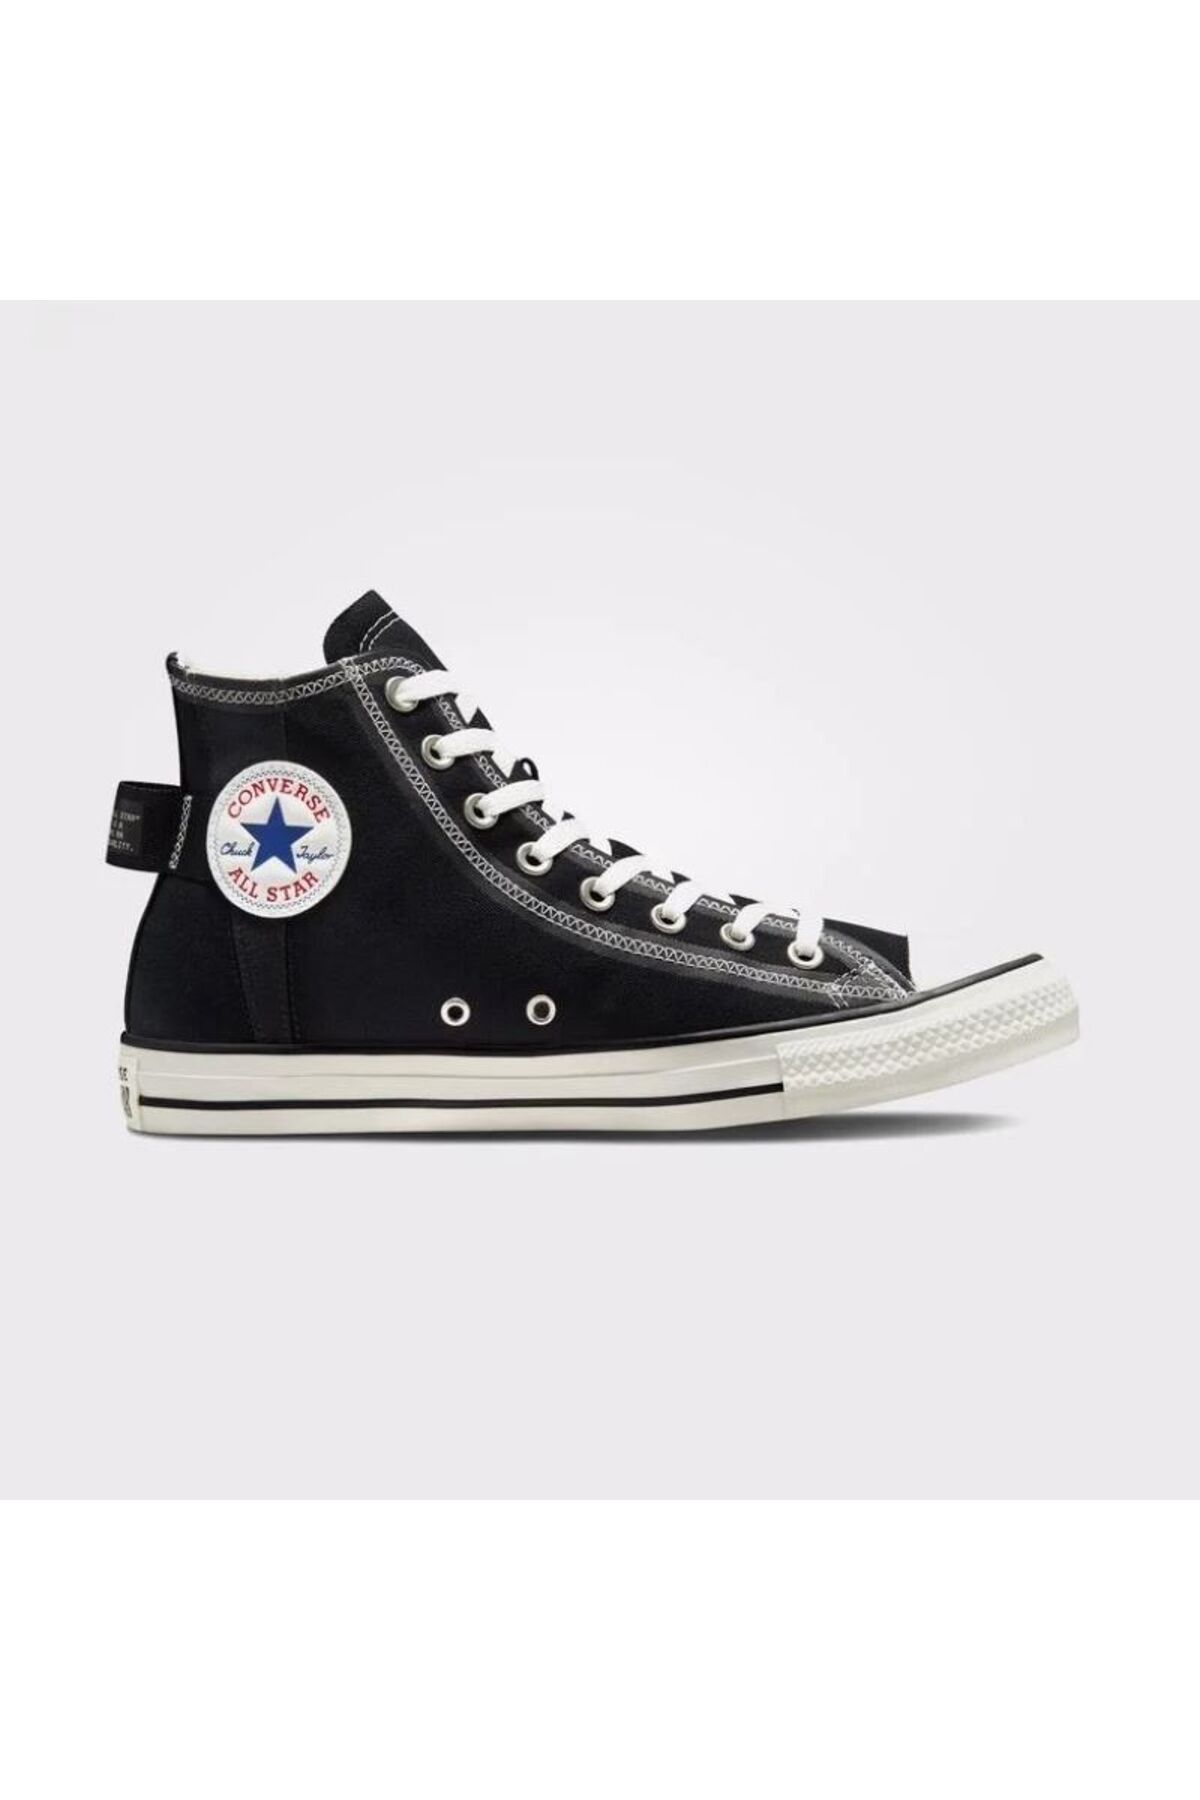 Converse Chuck Taylor All Star Unisex Siyah Sneaker Model kodu: A06105C.001